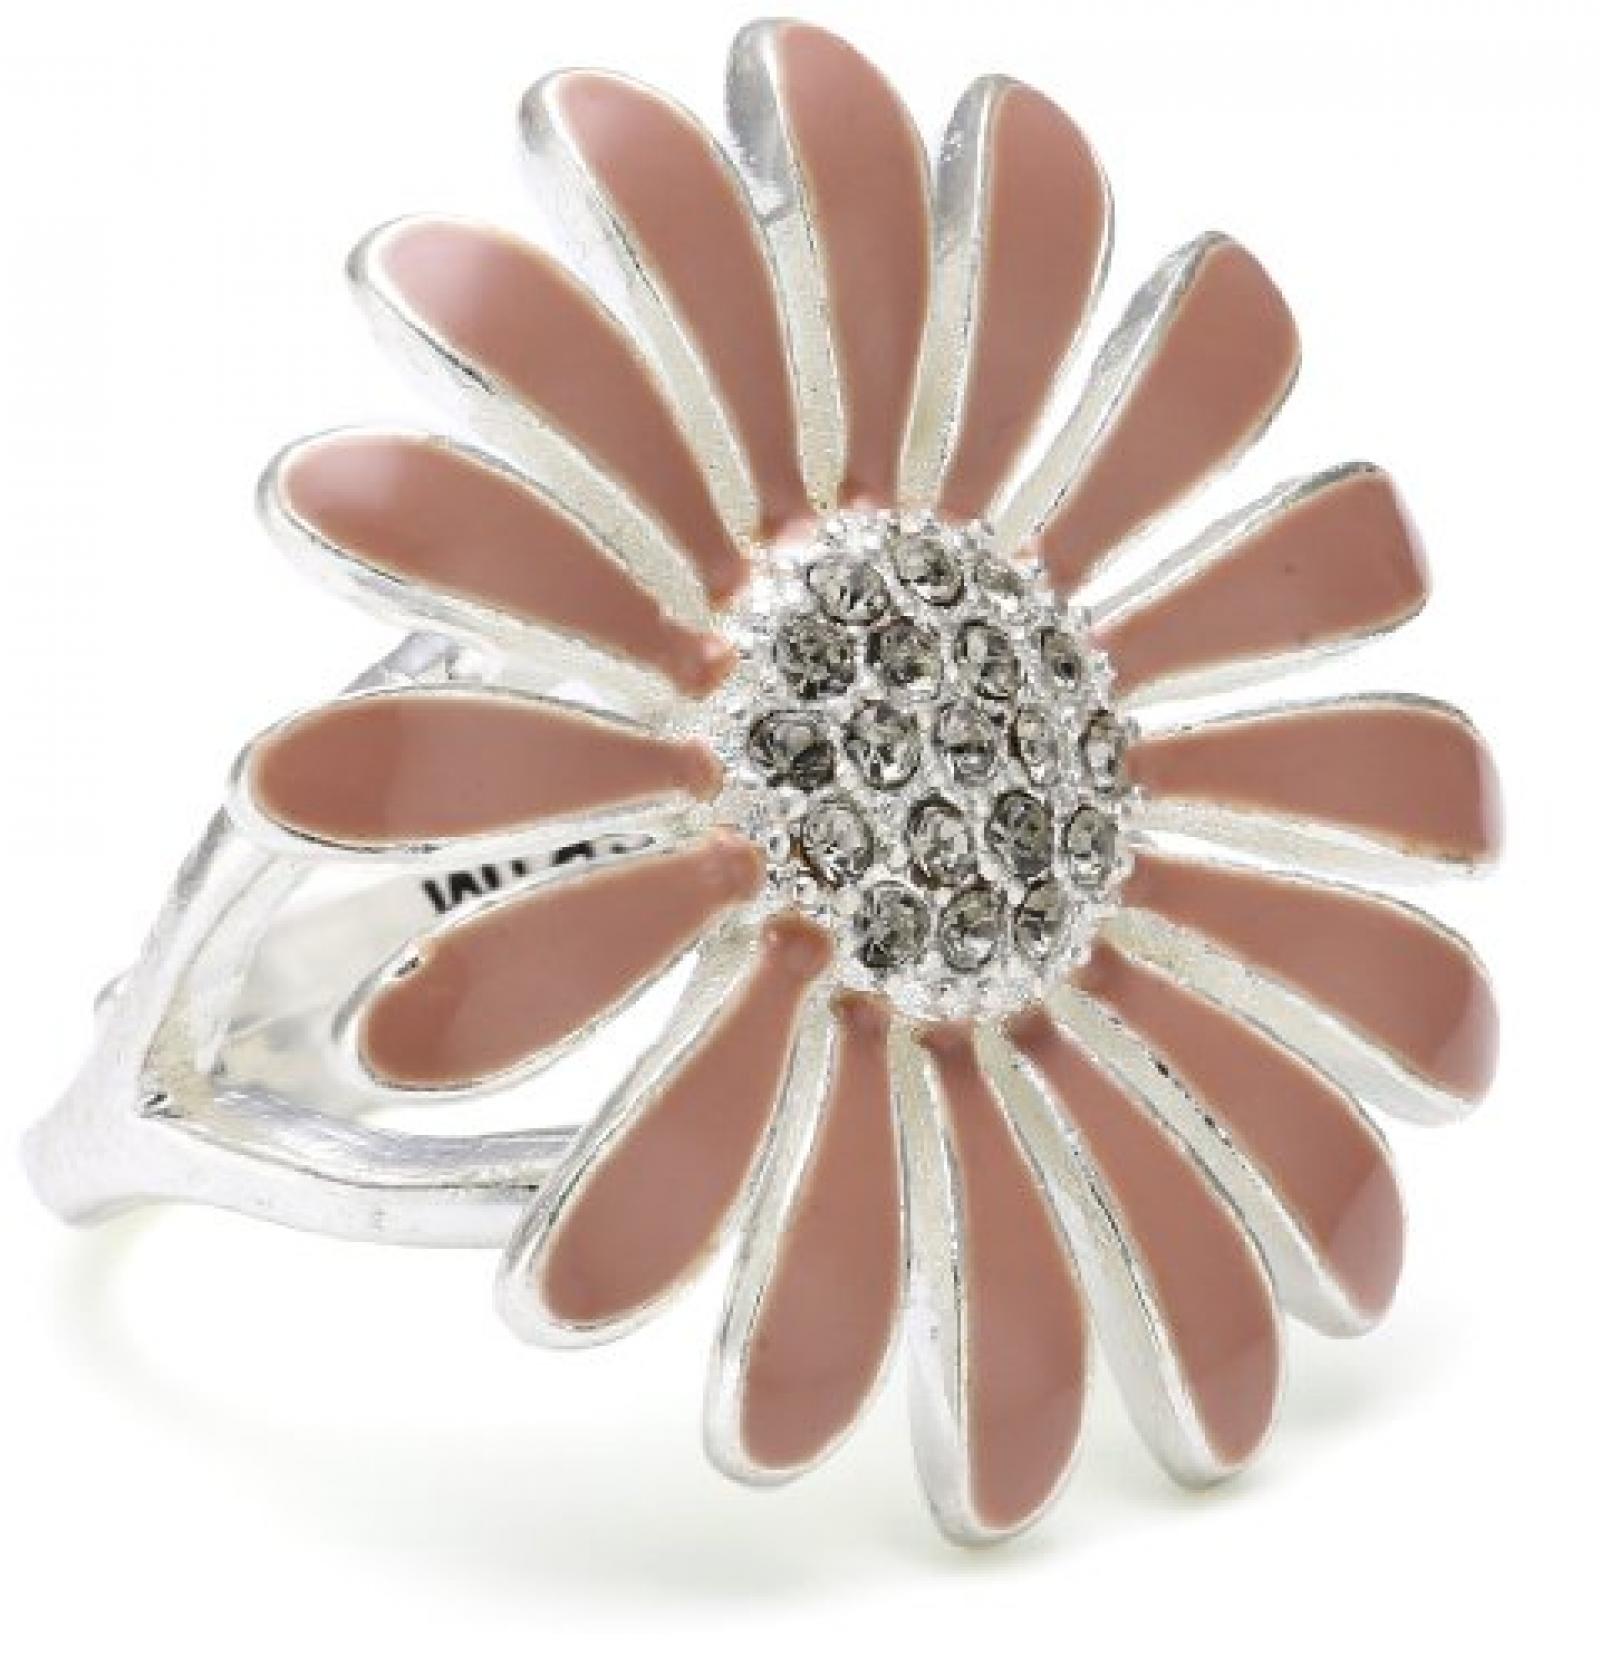 Pilgrim Jewelry Damen-Ring Blume versilbert rosa 2.6 cm verstellbar Gr. 51-59 171316704 